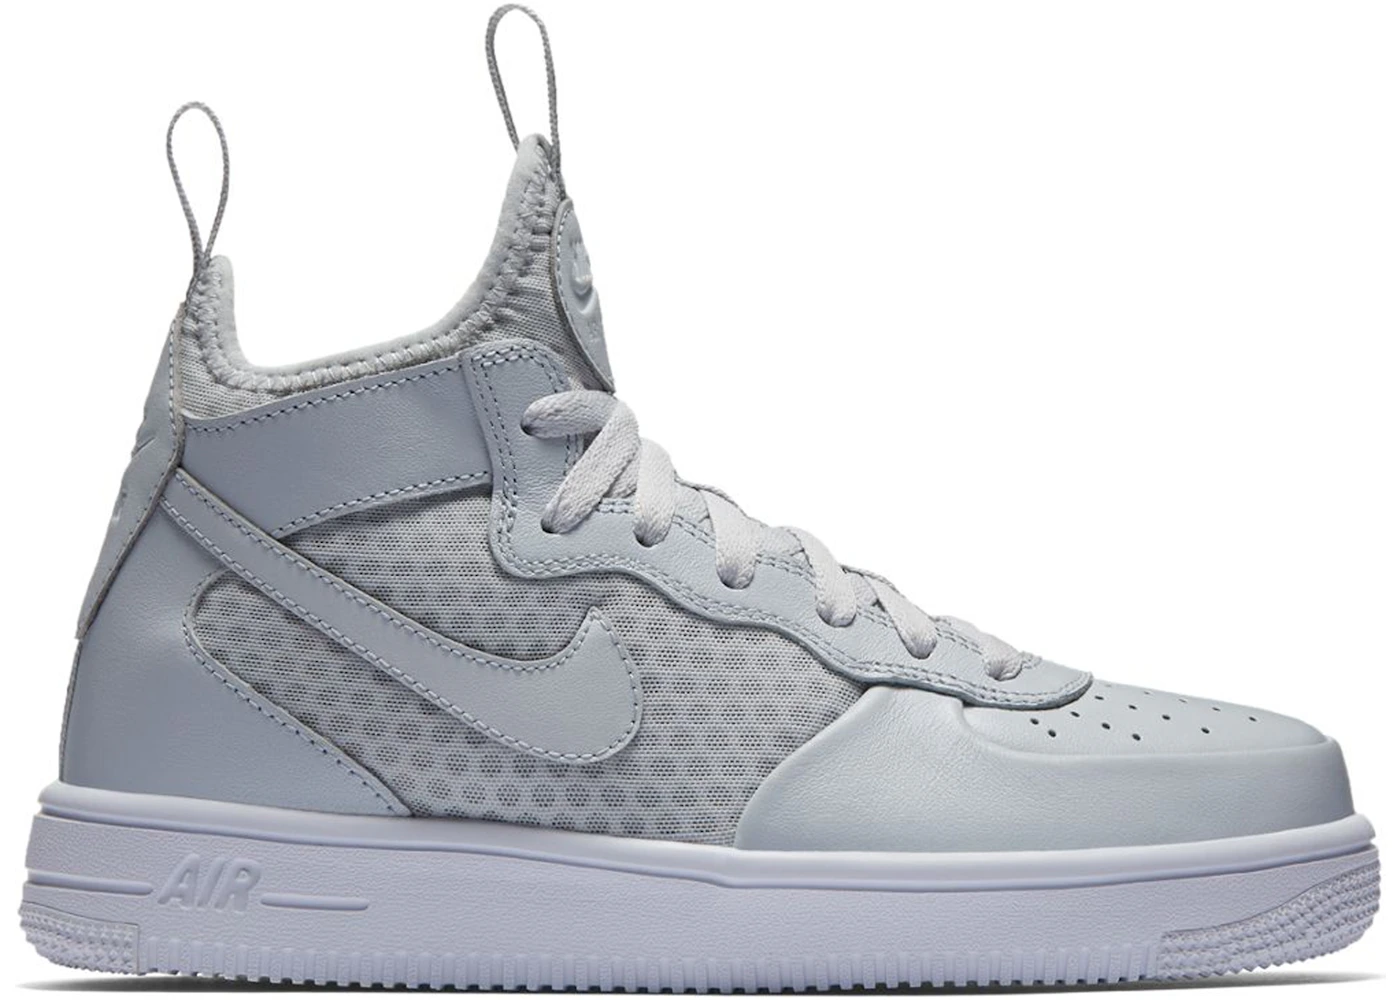 Nike Air Force 1 Ultraforce Mid Grey (Gs) - 869945-002 - Us